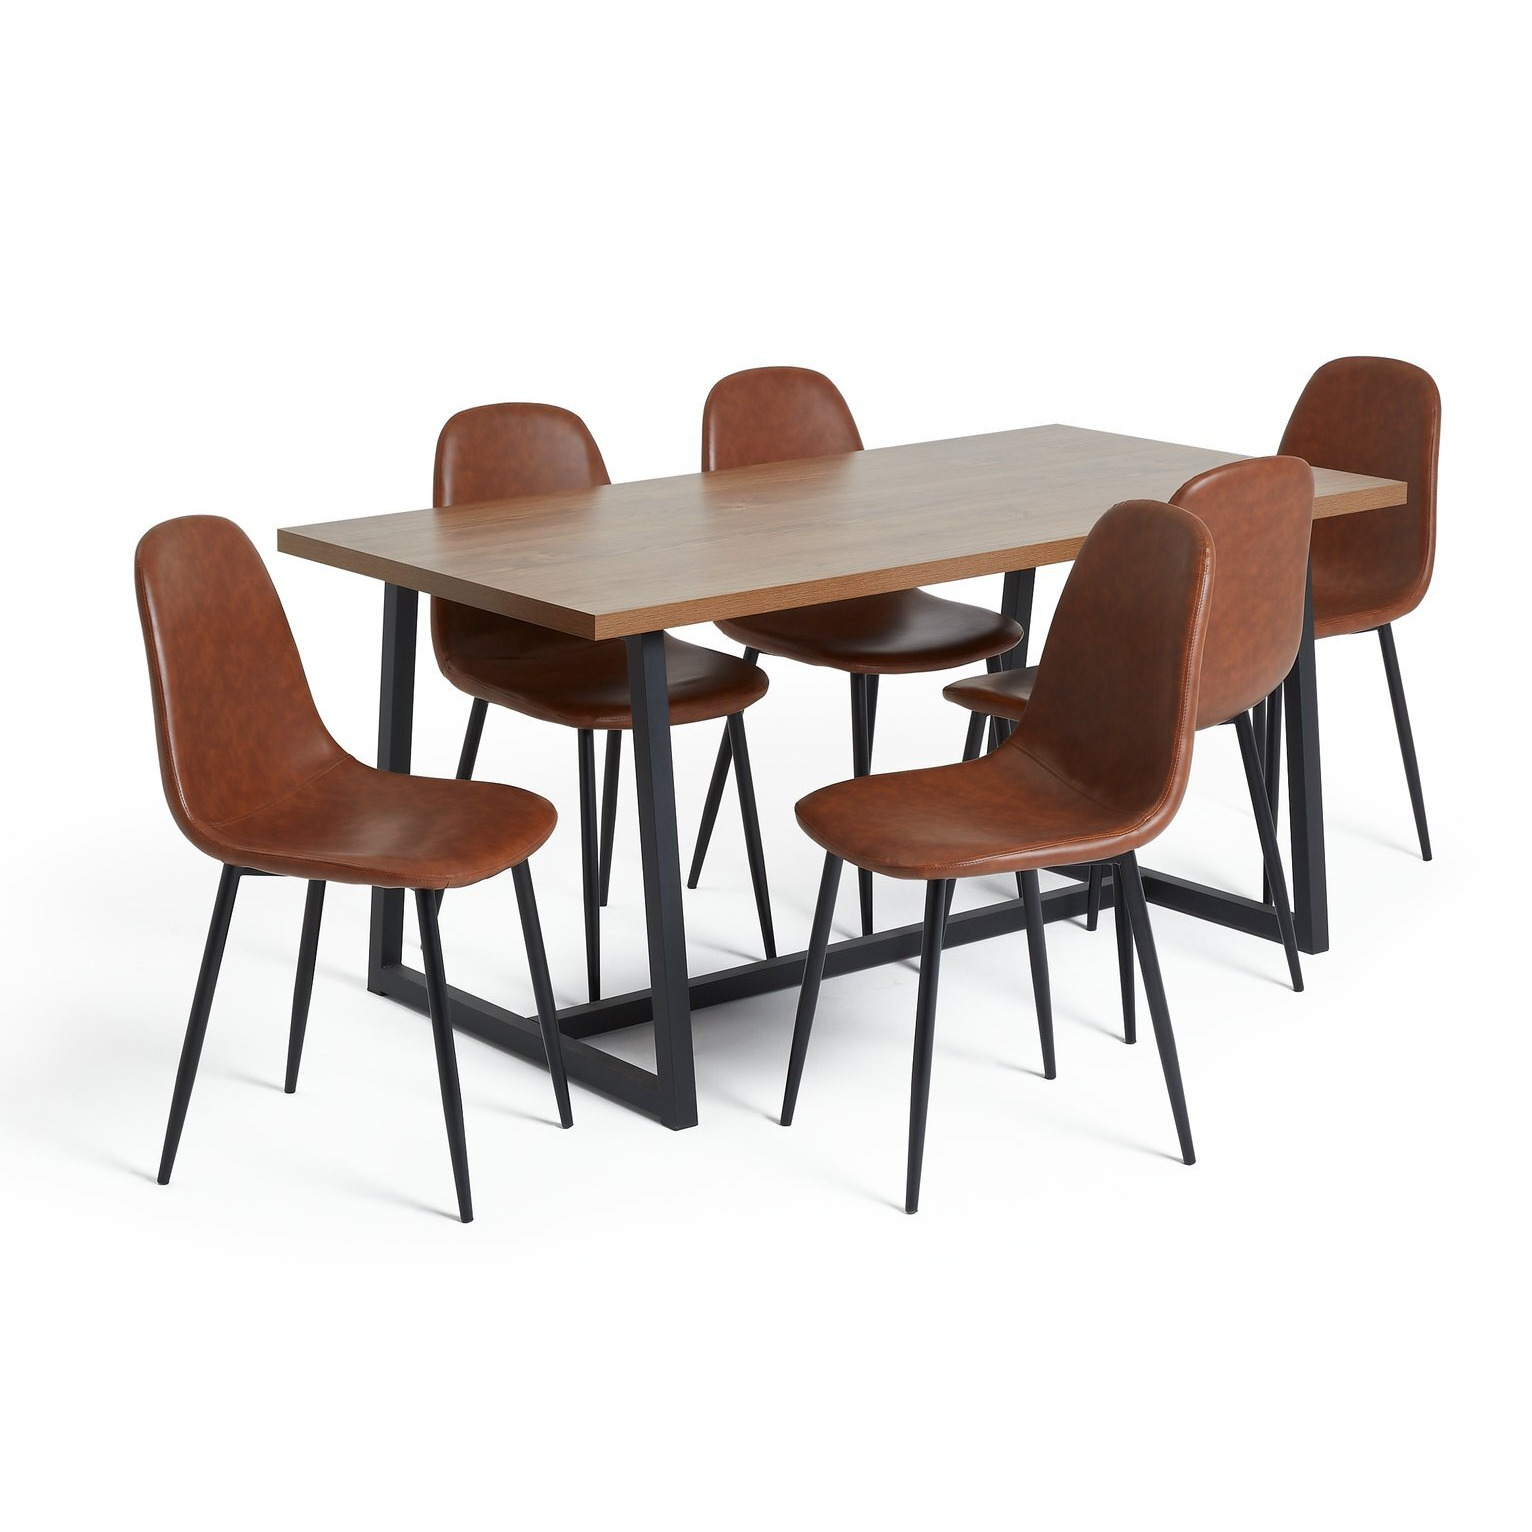 Habitat Nomad Oak Dining Table and 6 Beni Tan Chairs - image 1